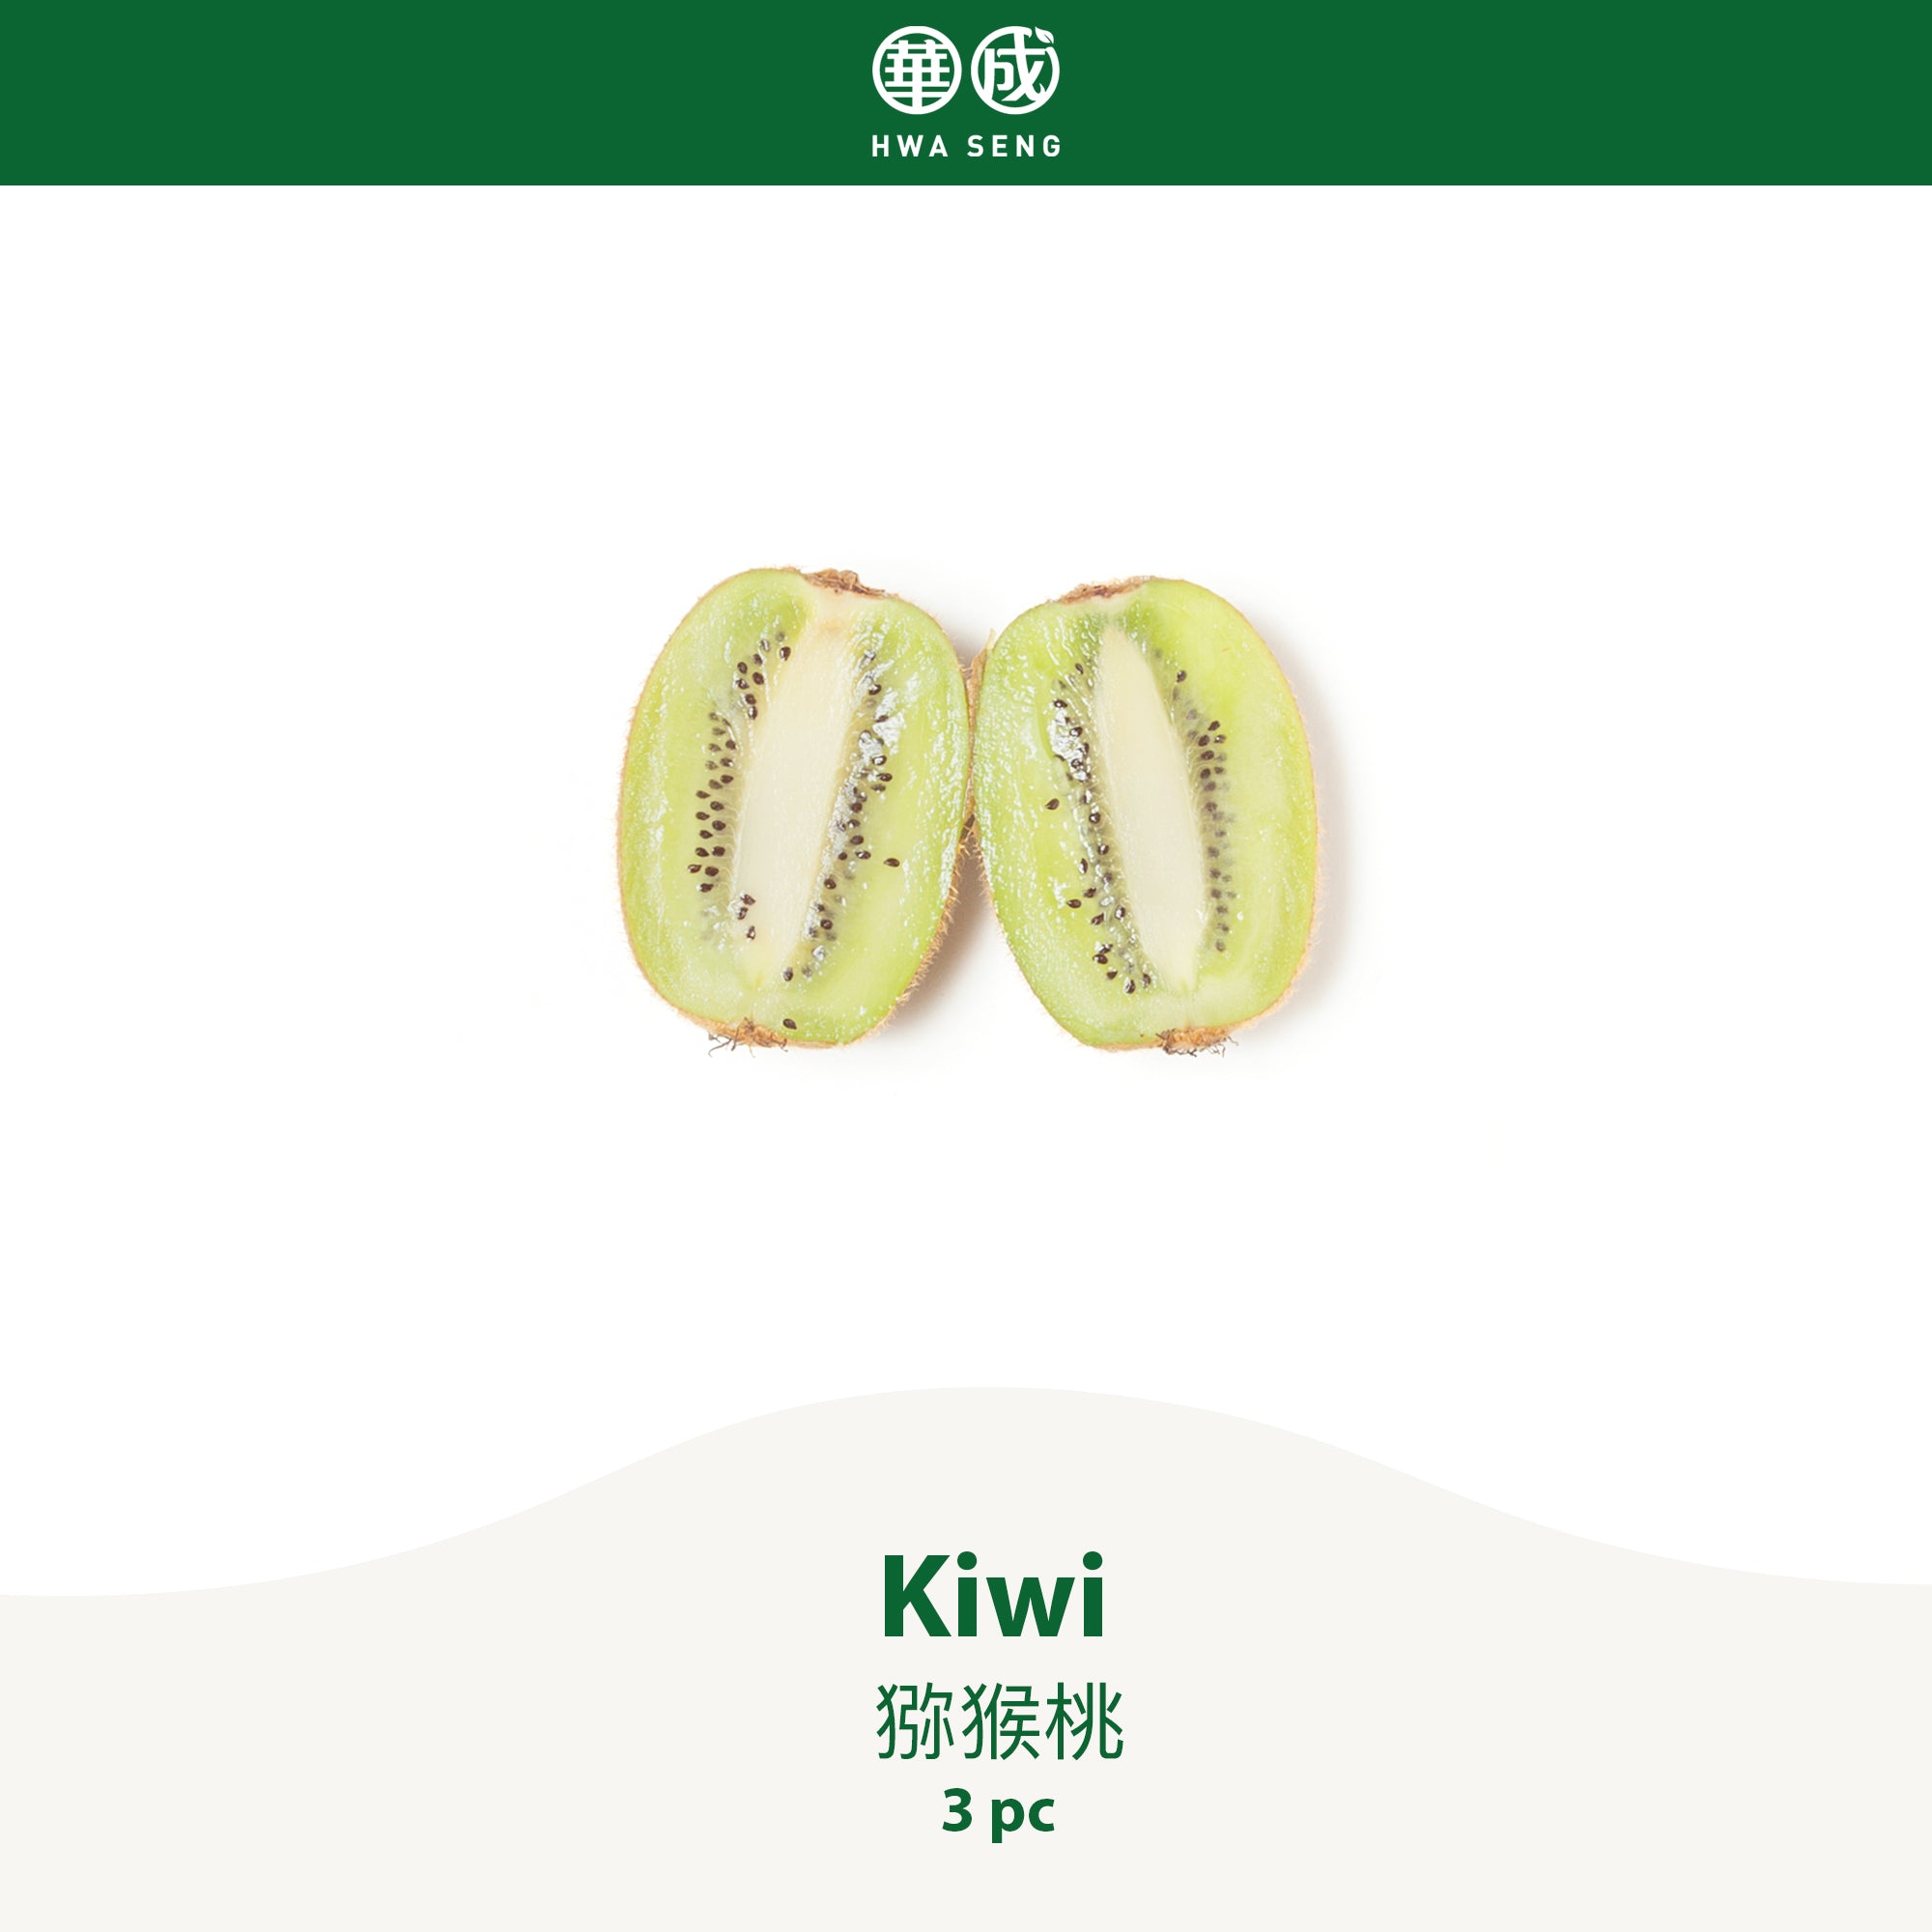 Kiwi 猕猴桃 3pcs